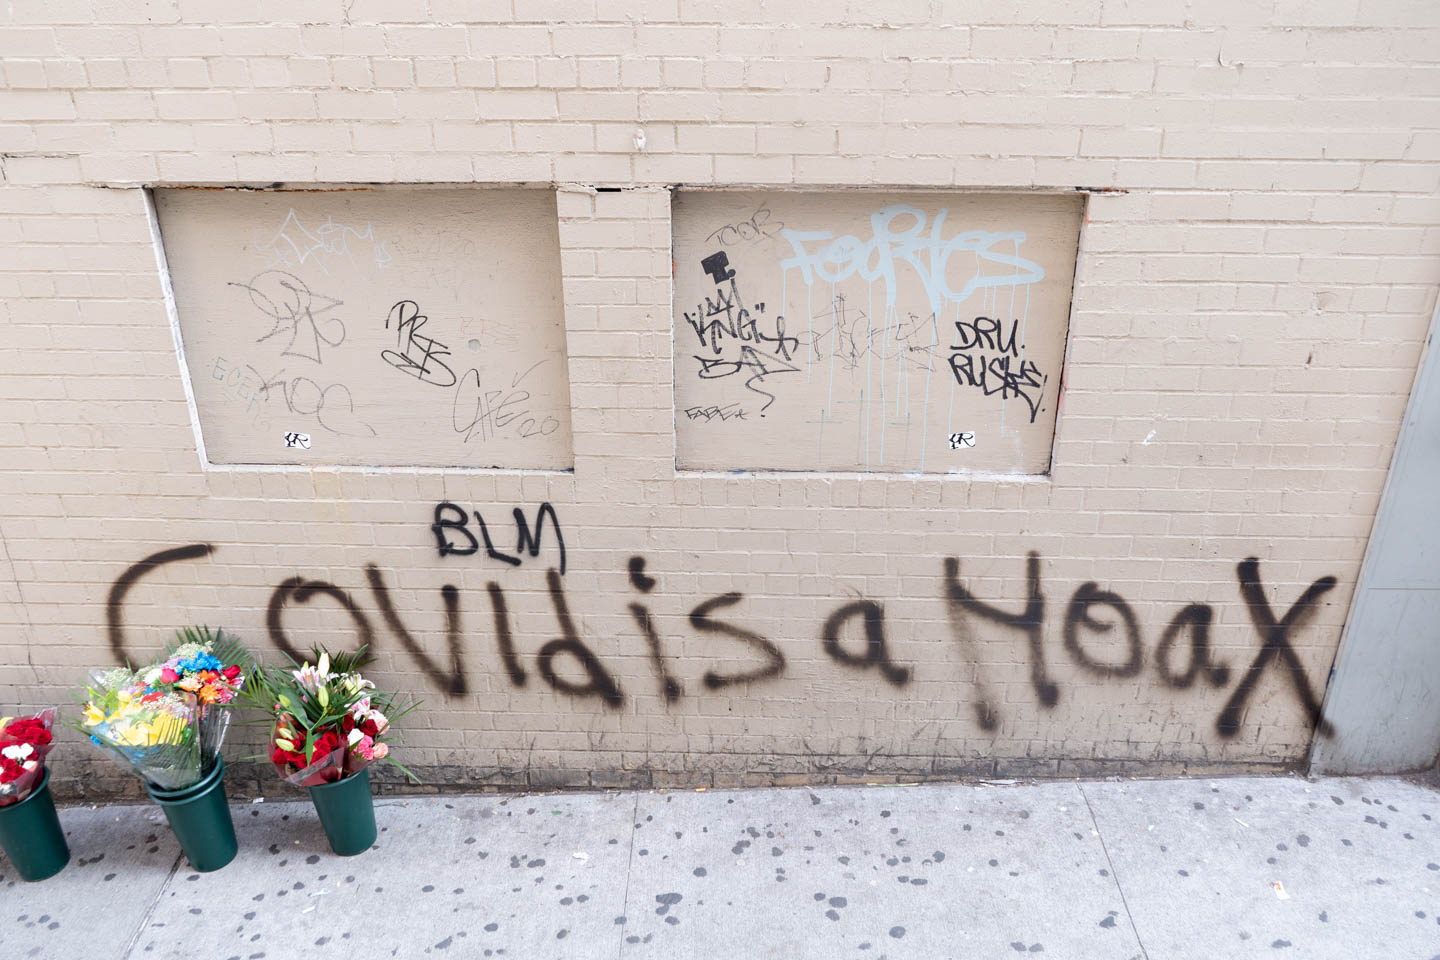 September 21, 2020: “Covid is a Hoax,” below “BLM.” Broadway at West 125th Street, Harlem, New York, New York. © Camilo José Vergara